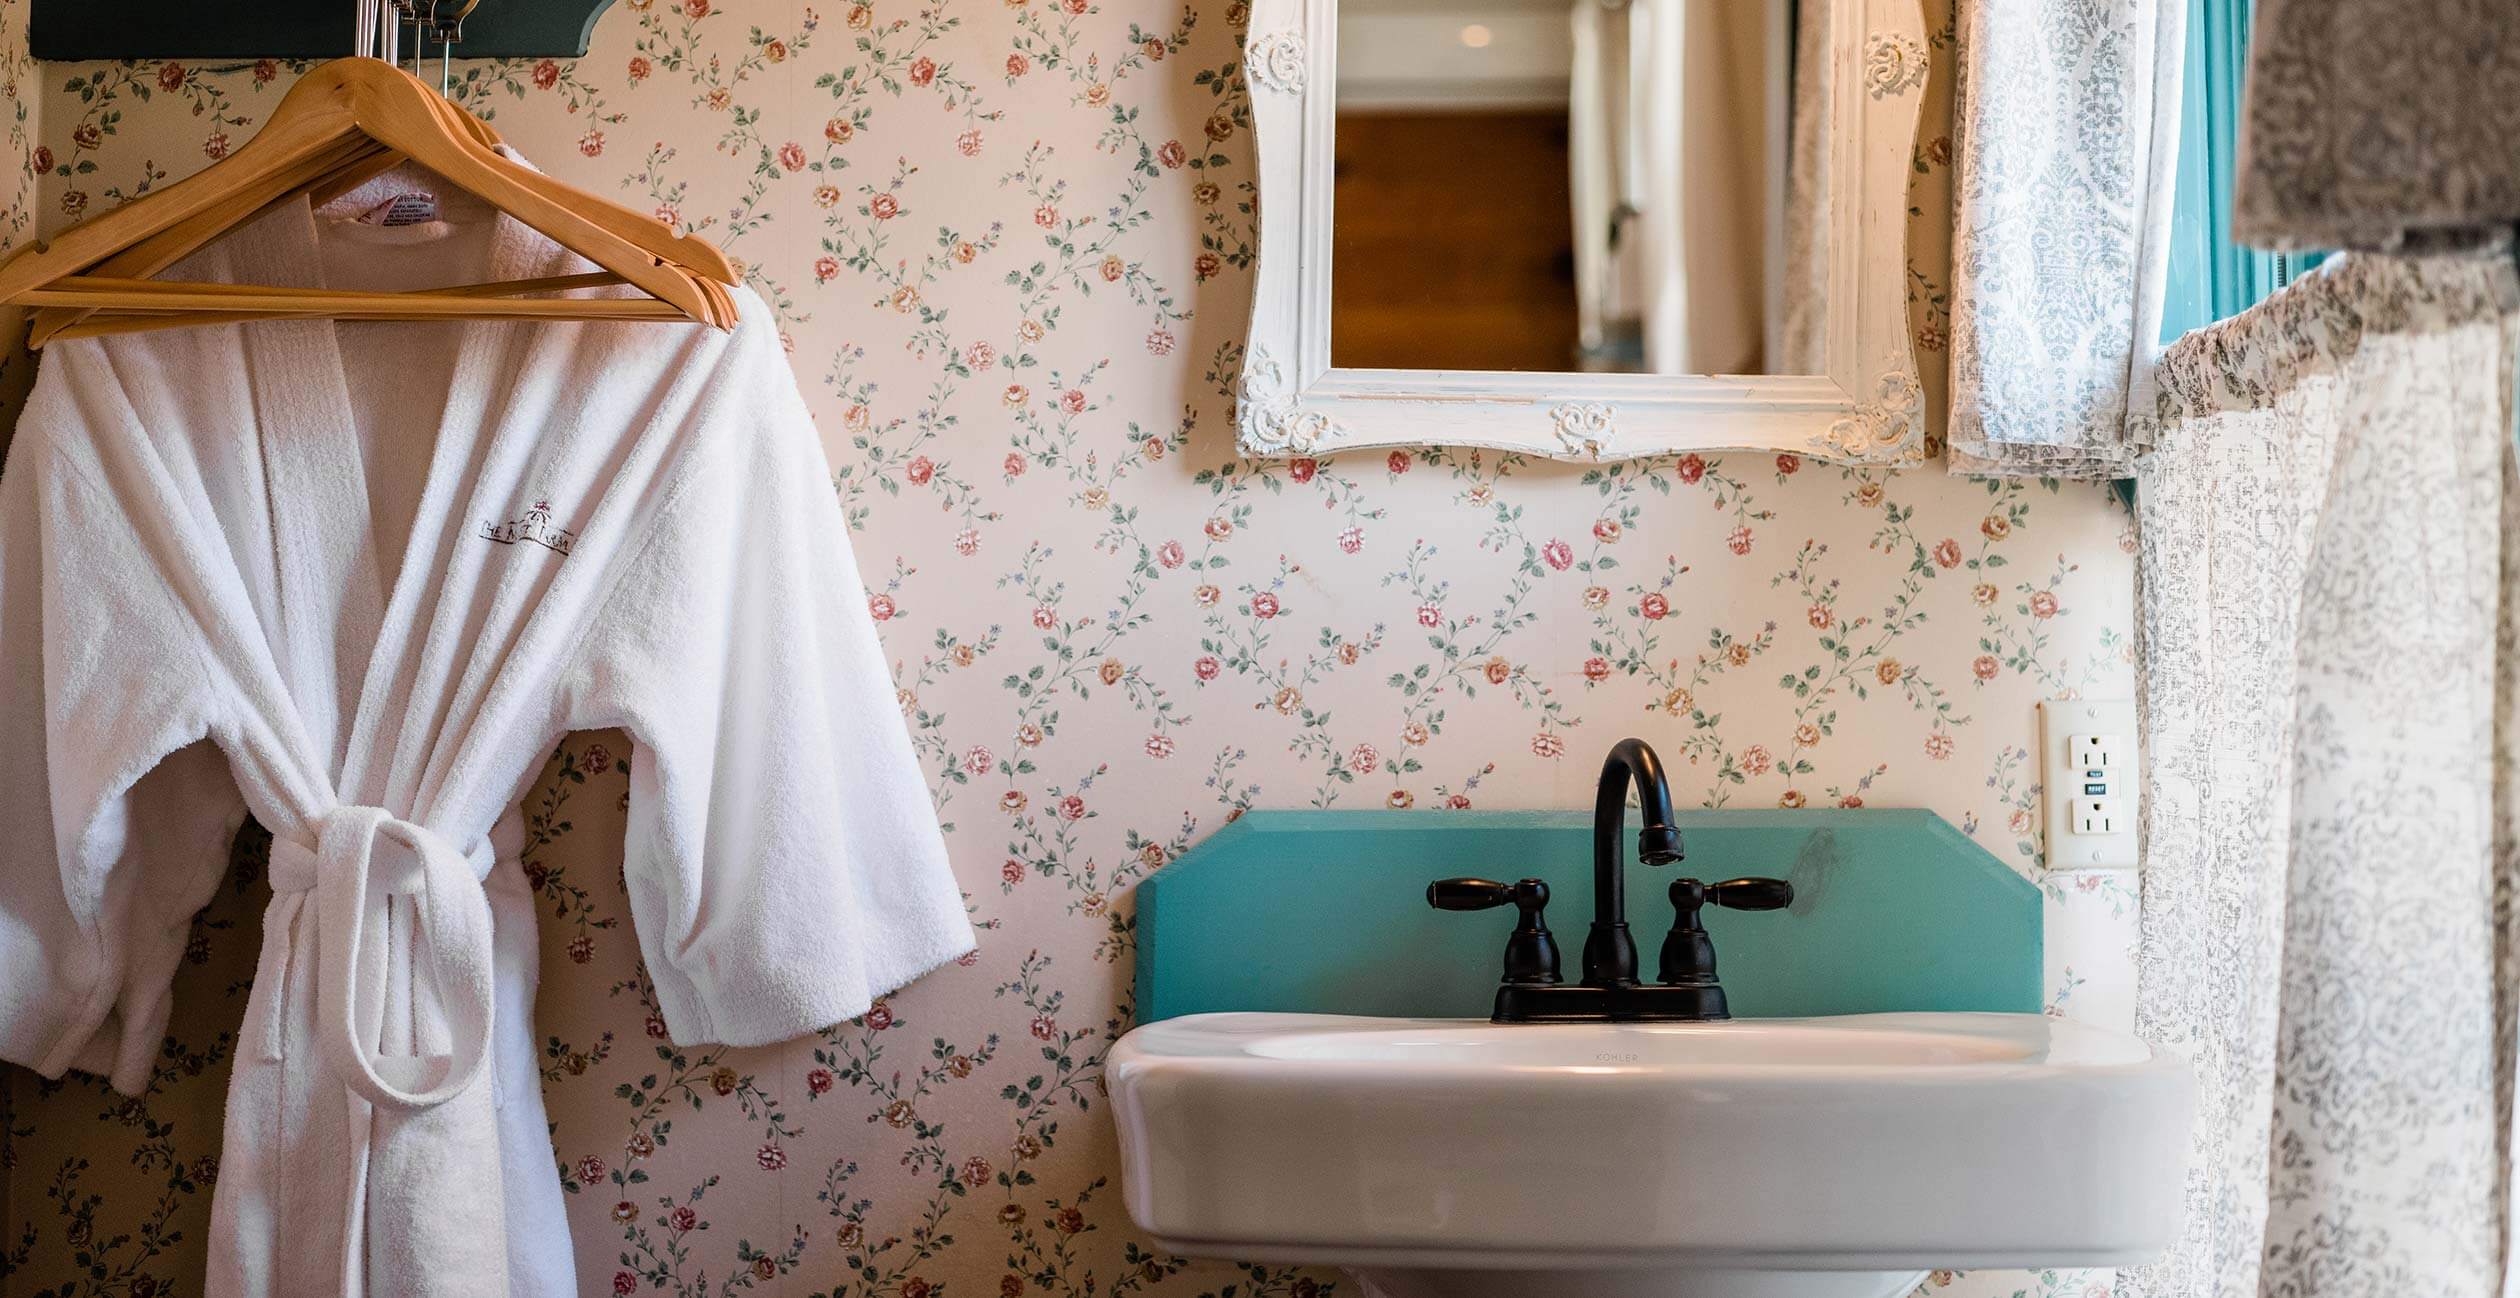 Bathrobe hanging by sink in the Elizabeth Gray Vining room's bathroom